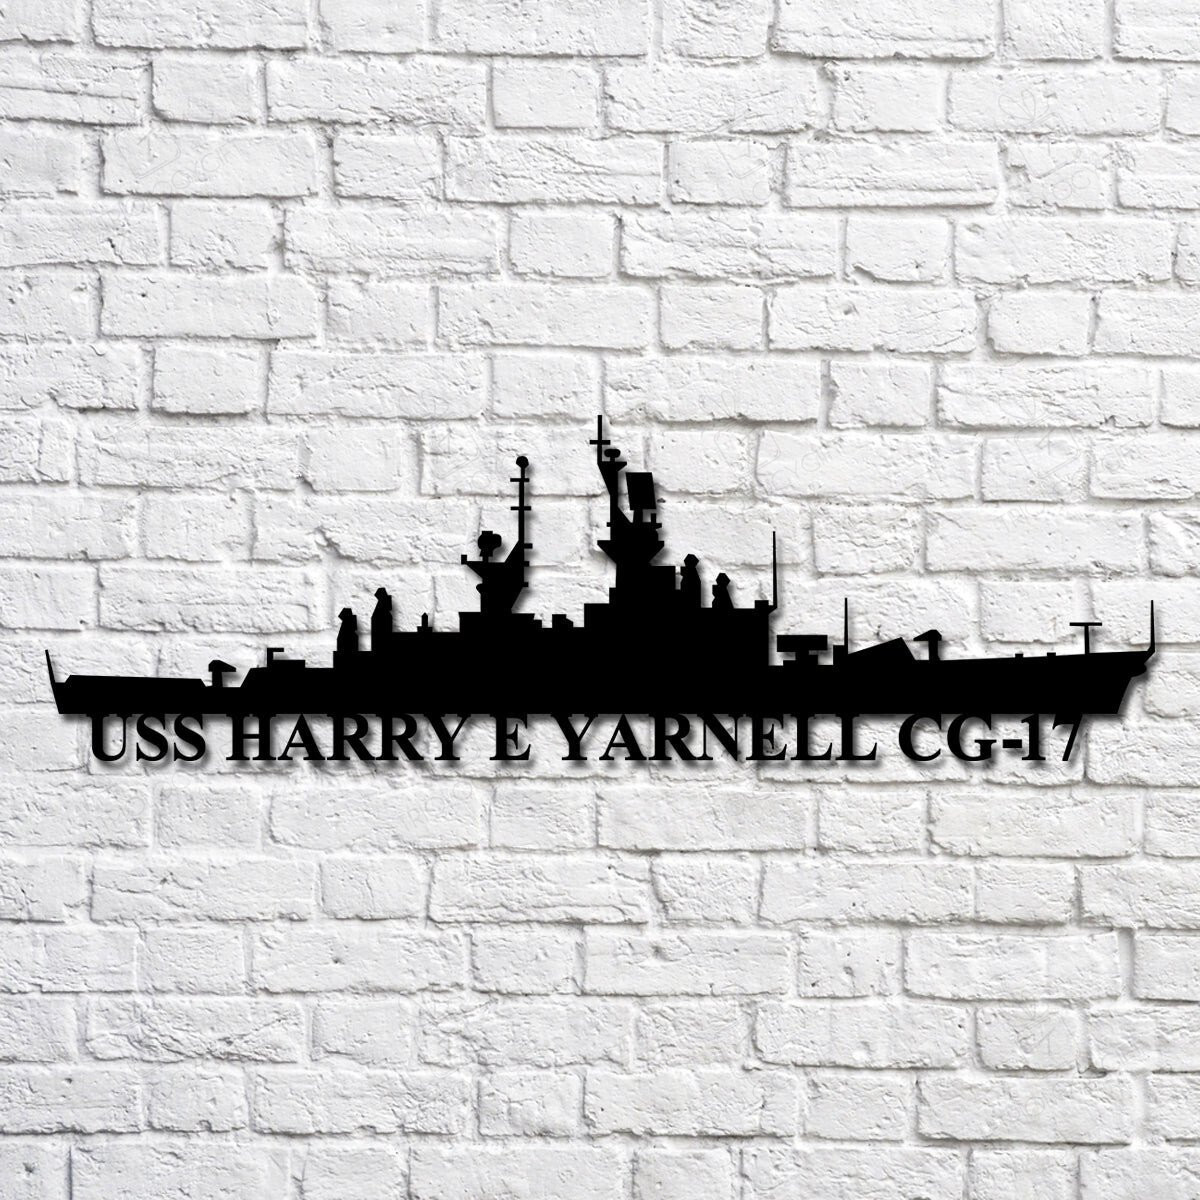 Uss Harry E Yarnell Cg17 Navy Ship Metal Art, Custom Us Navy Ship Cut Metal Sign, Gift For Navy Veteran, Navy Ships Silhouette Metal Art, Navy Laser Cut Metal Signs 12x12IN